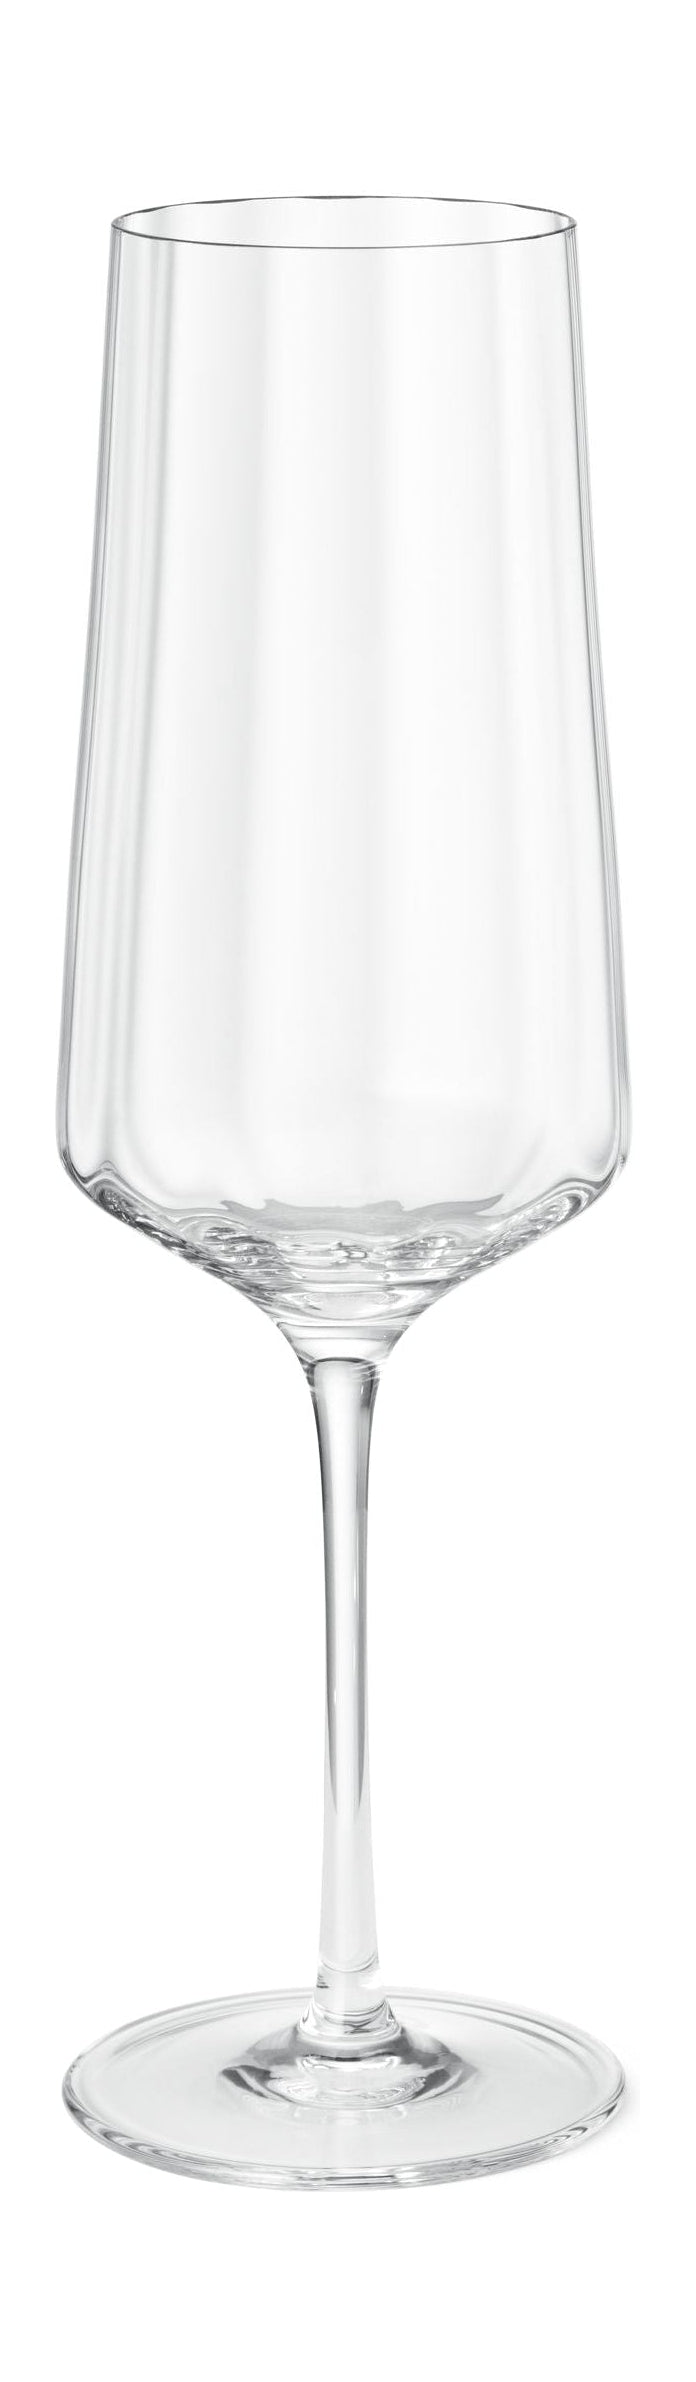 Georg Jensen Bernadotte Champagne Glass 27 Cl 6 szt.